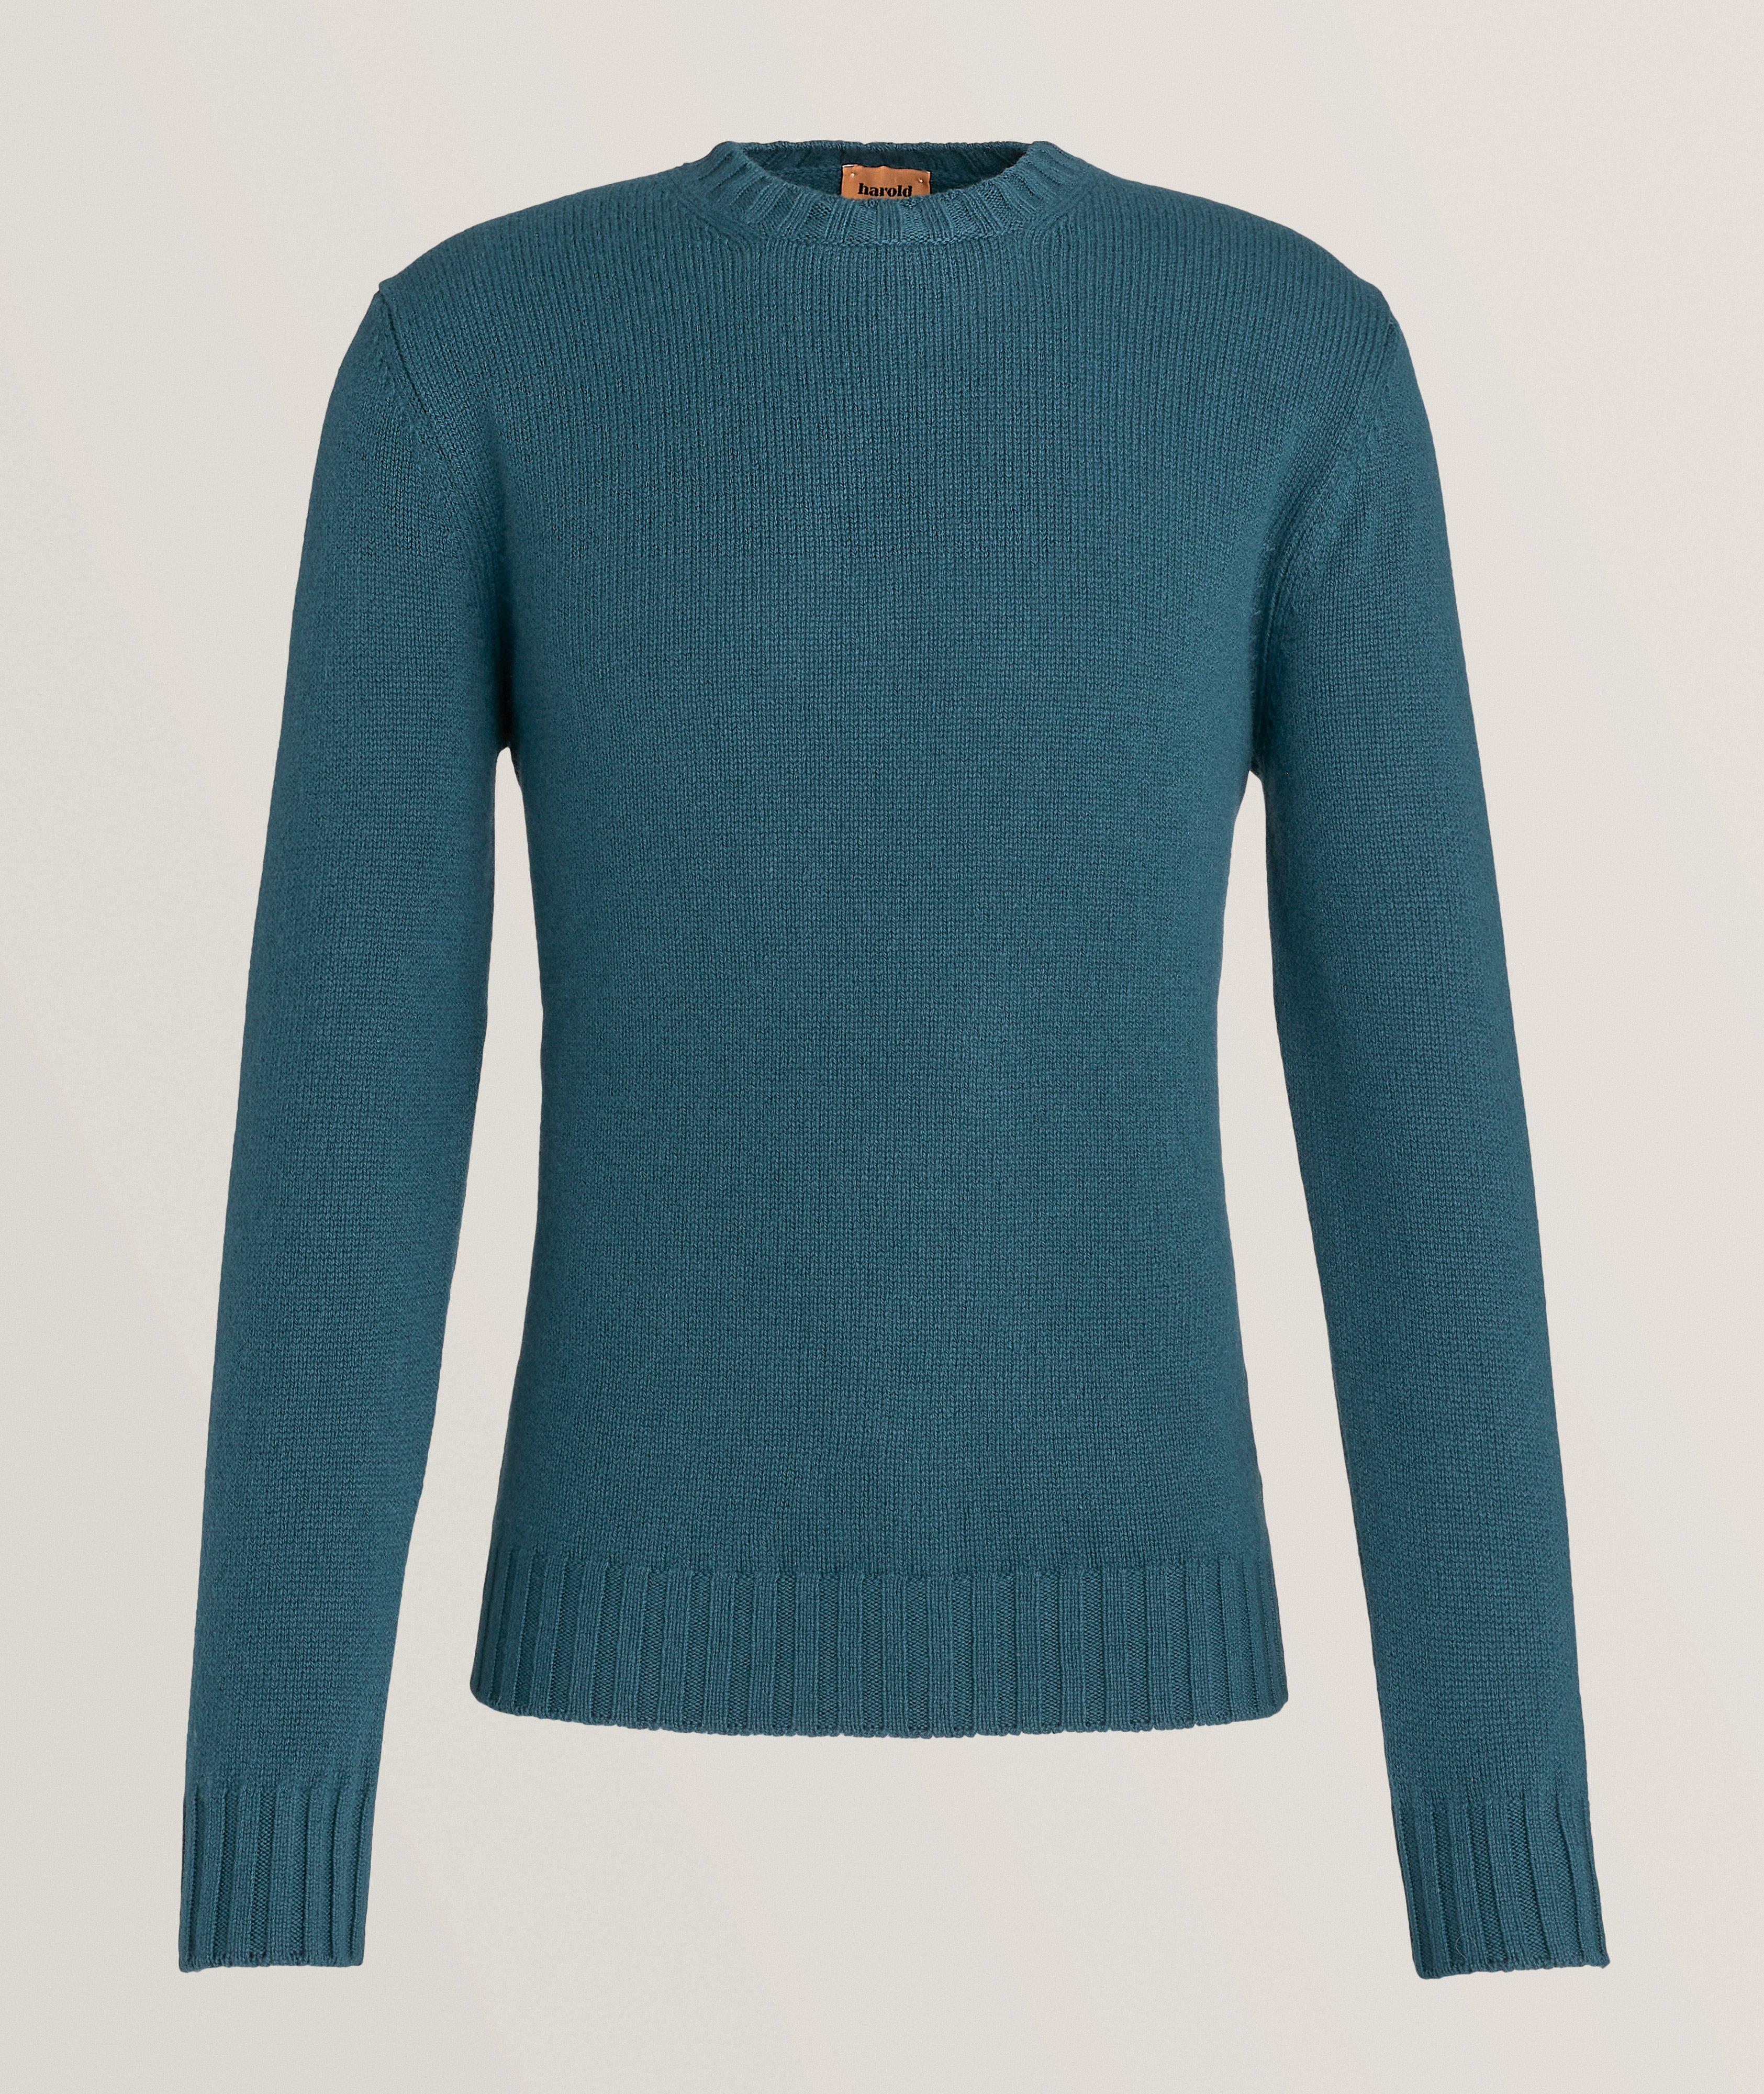 Extra-Fine Gauge Merino Wool Sweater image 0